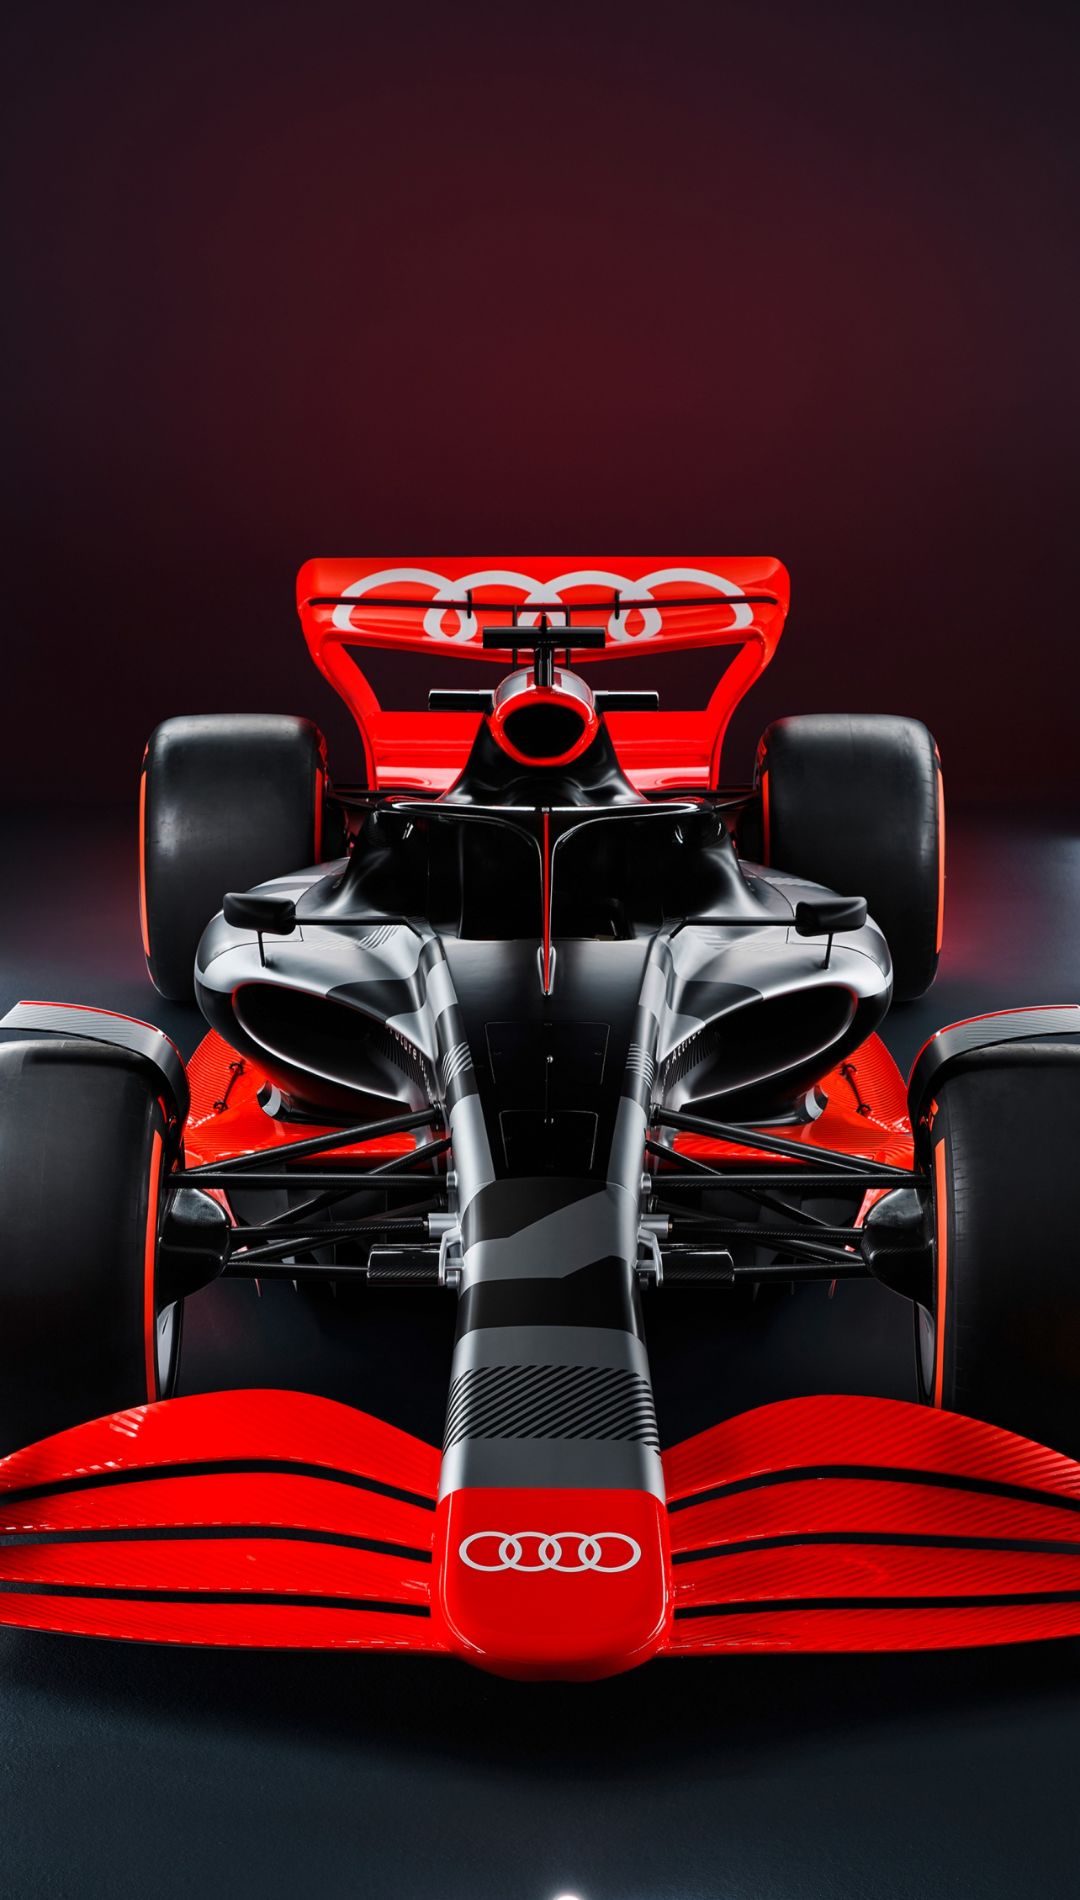 F1 Racing Wallpaper iPhone 6